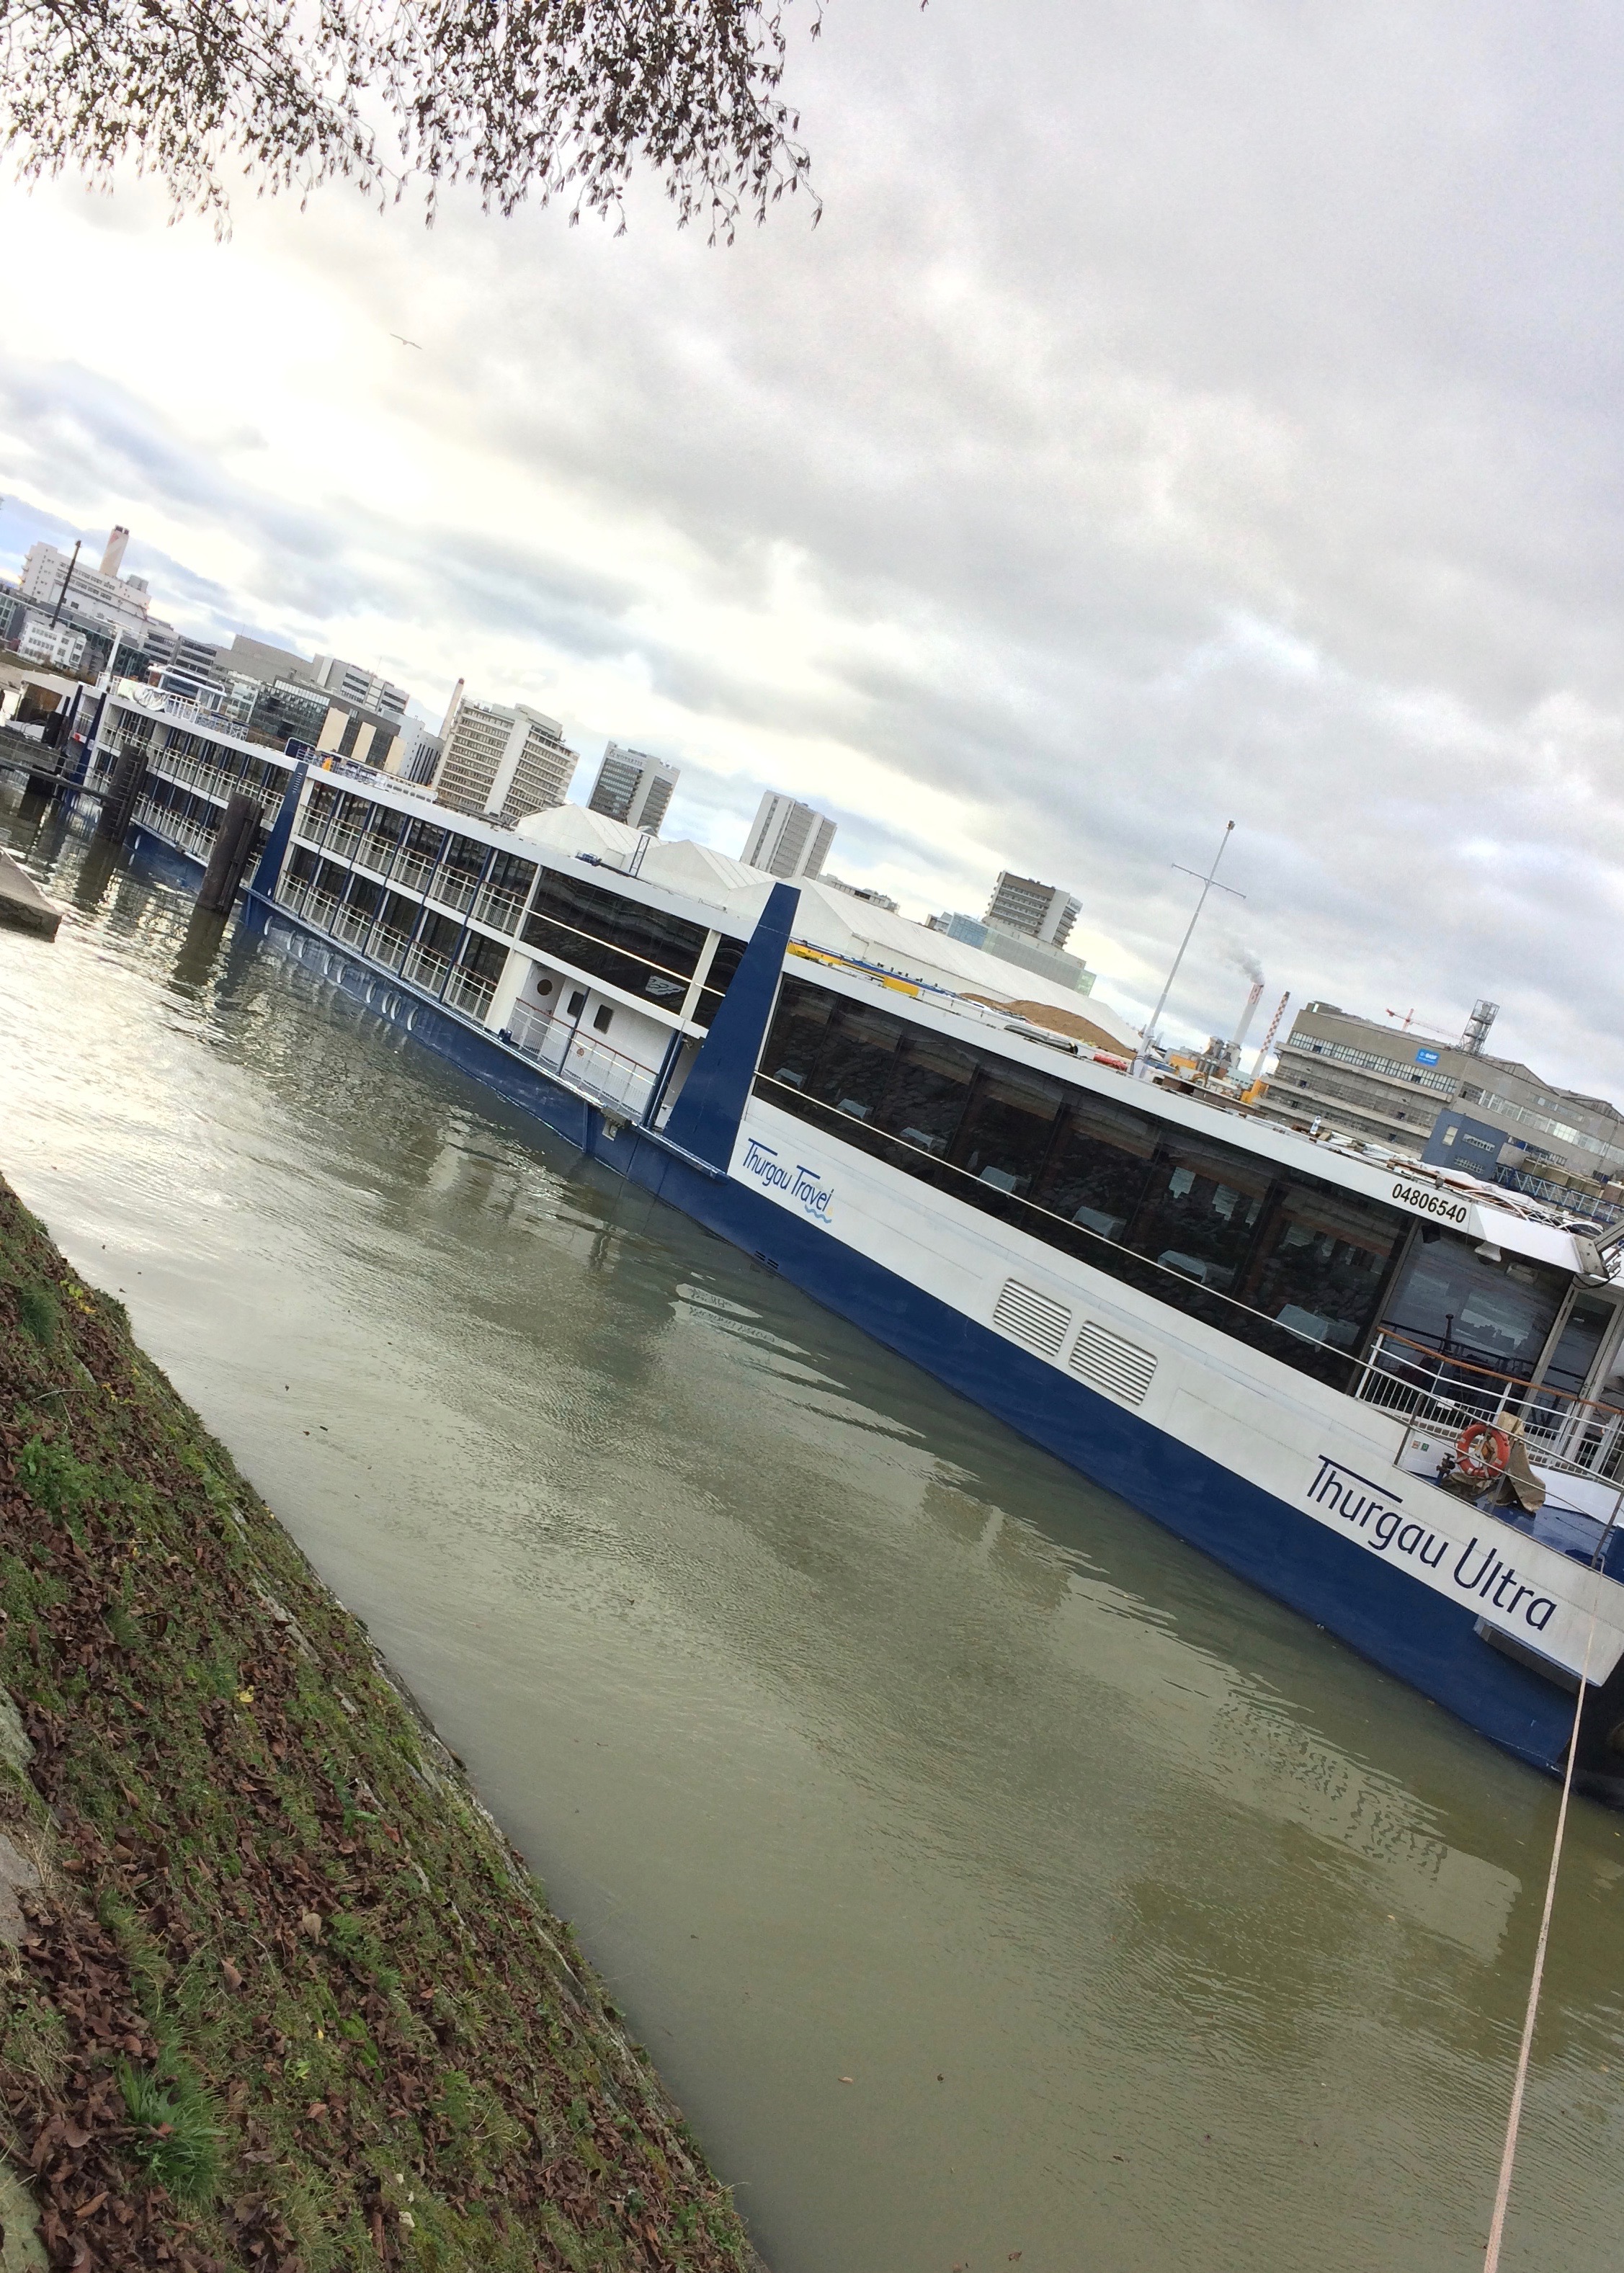 Thurgau Ultra docked in Basel Klybeck river cruise port